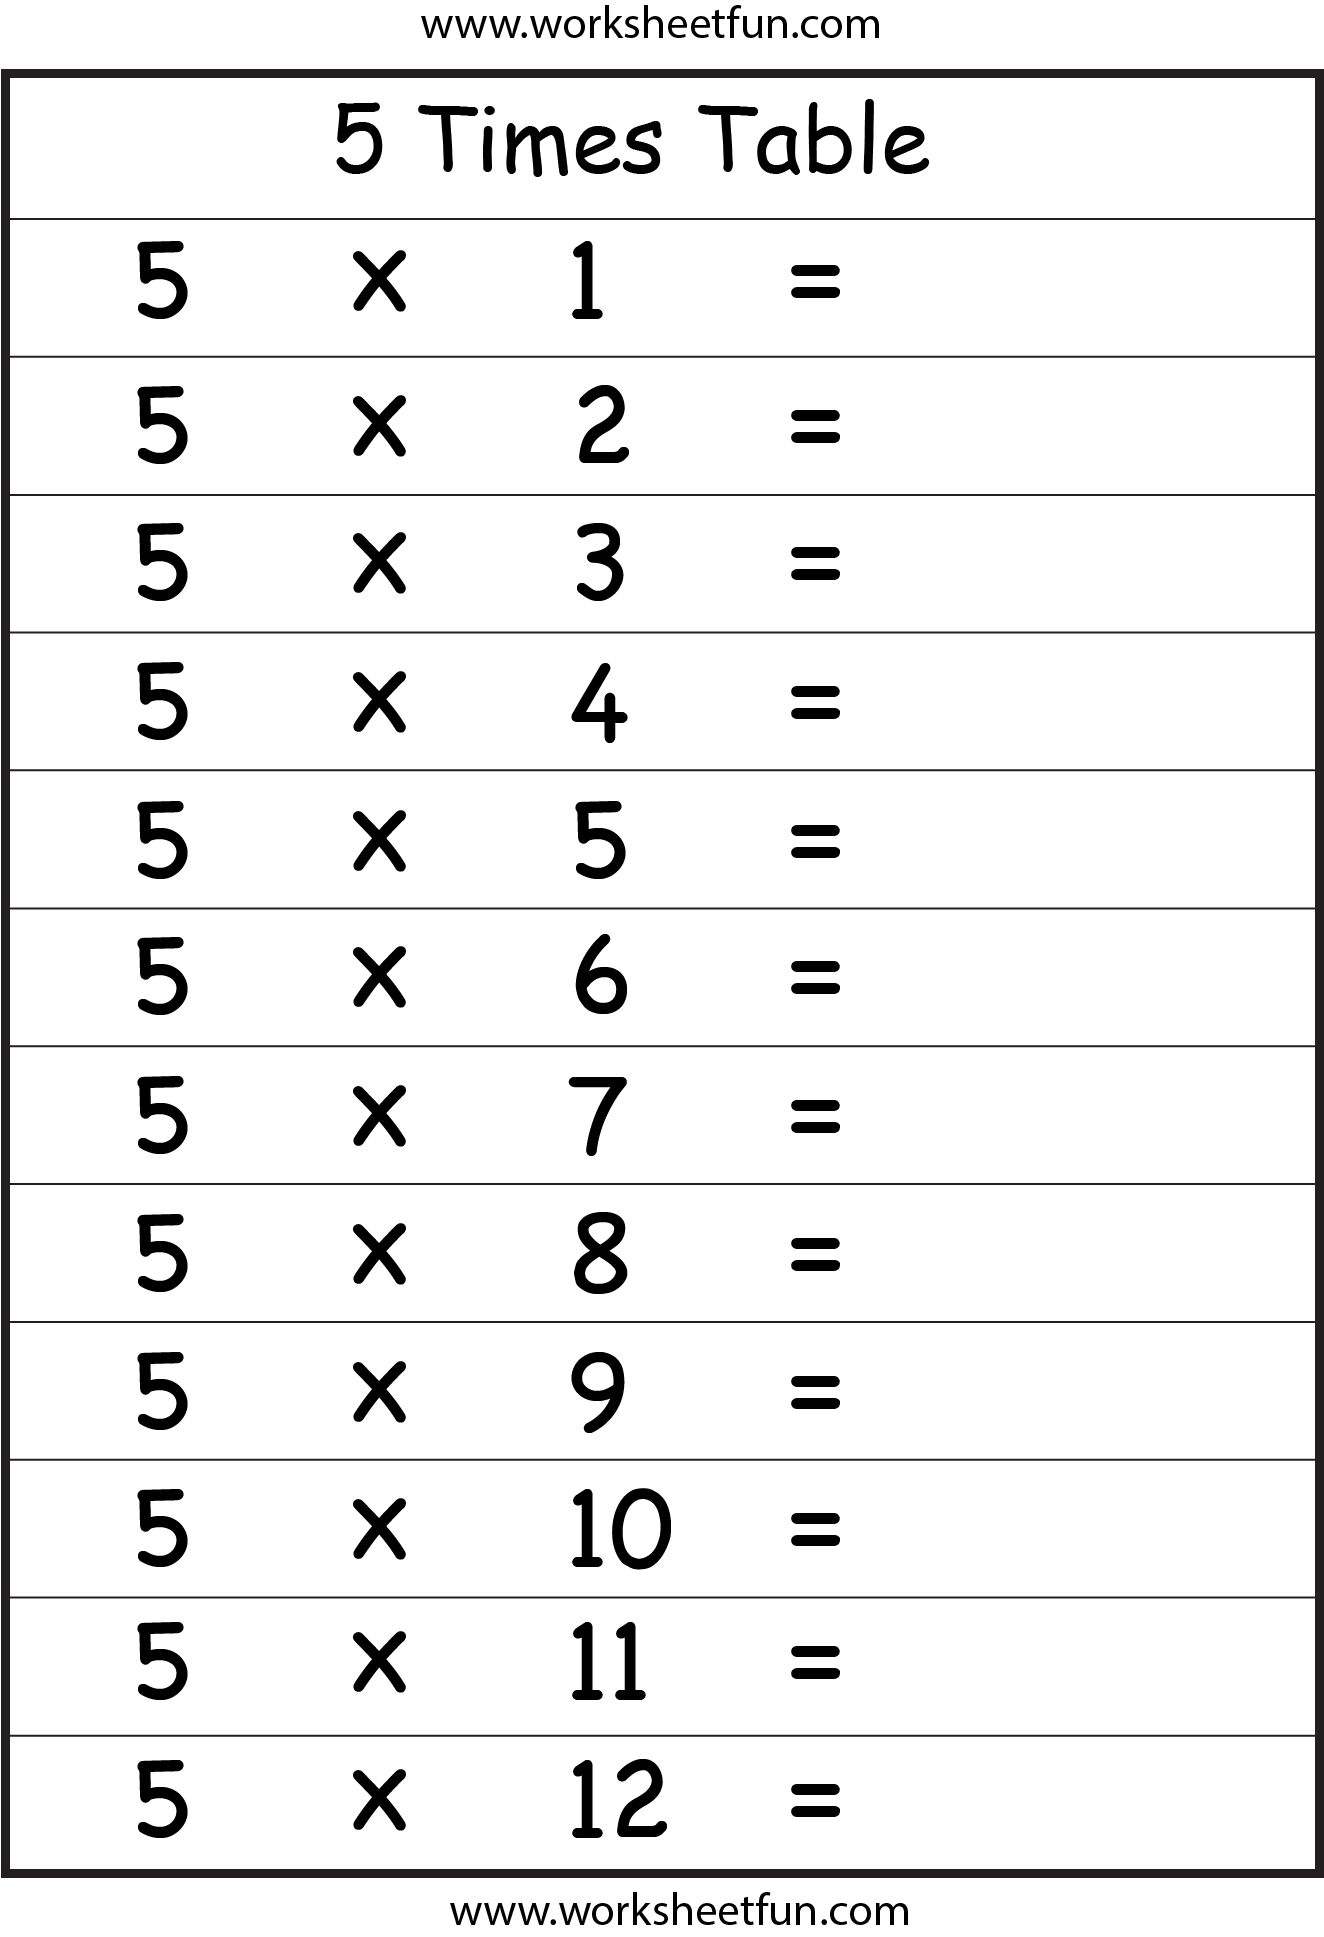 Multiplication Times Tables Worksheets – 2, 3, 4, 5, 6, 7